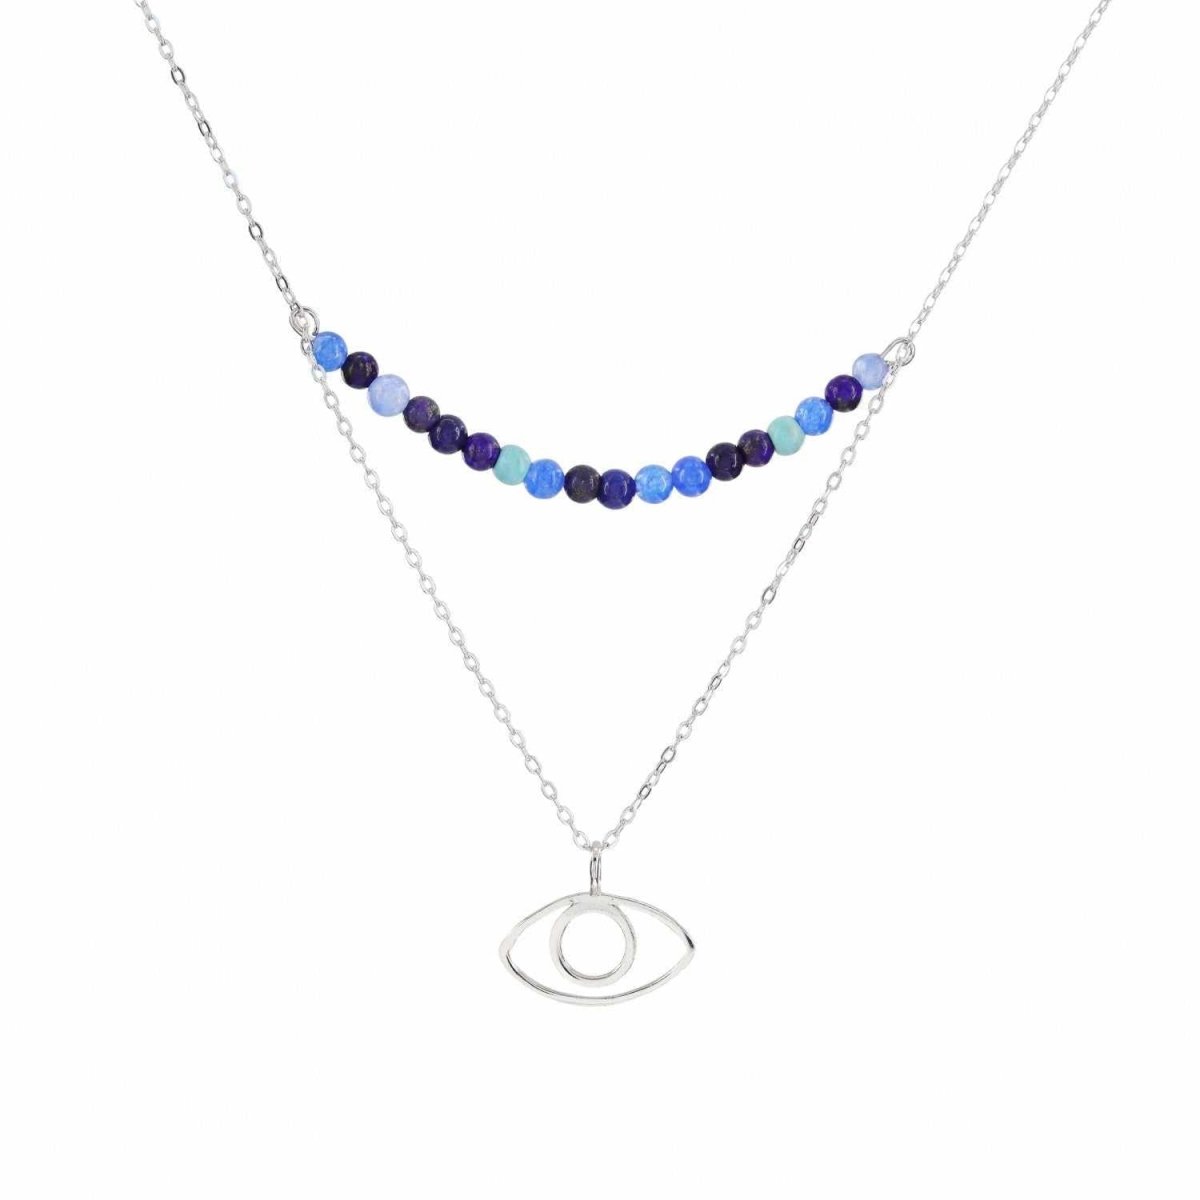 Collar · Collares dobles detalle de charm de ojo y gemas azules